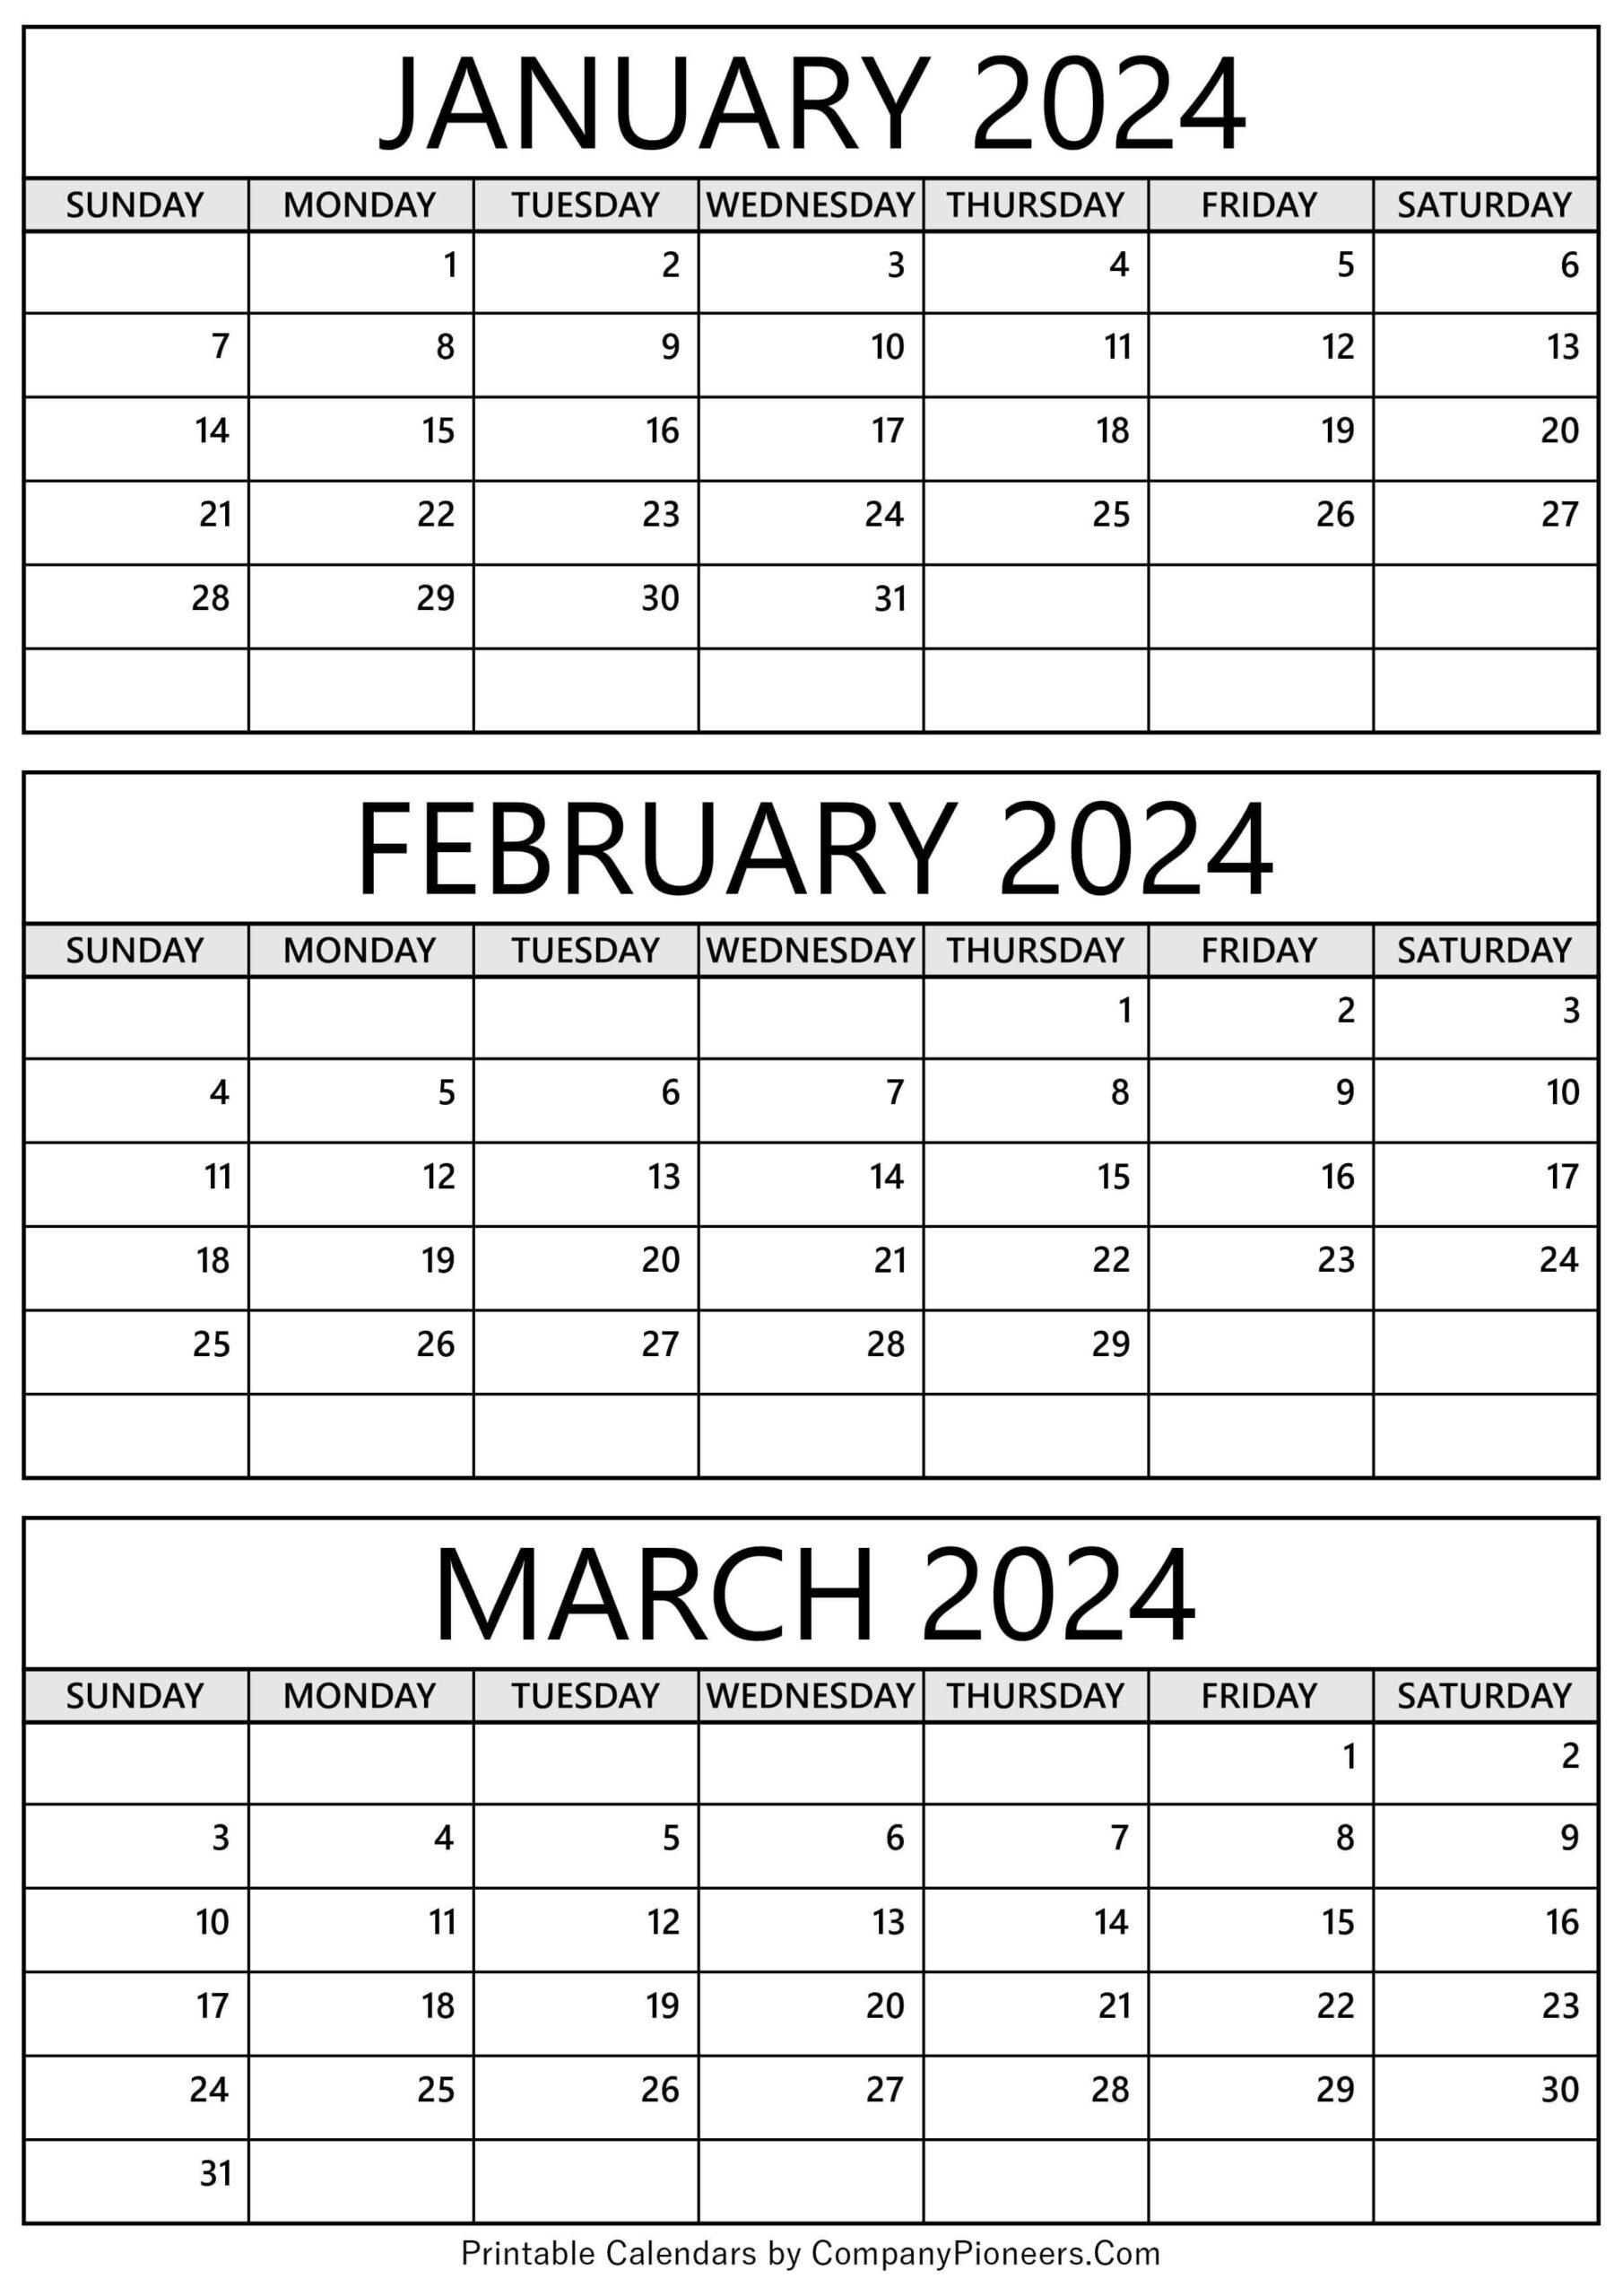 January February March 2024 Calendar Printable - Template for January To March 2024 Calendar Printable